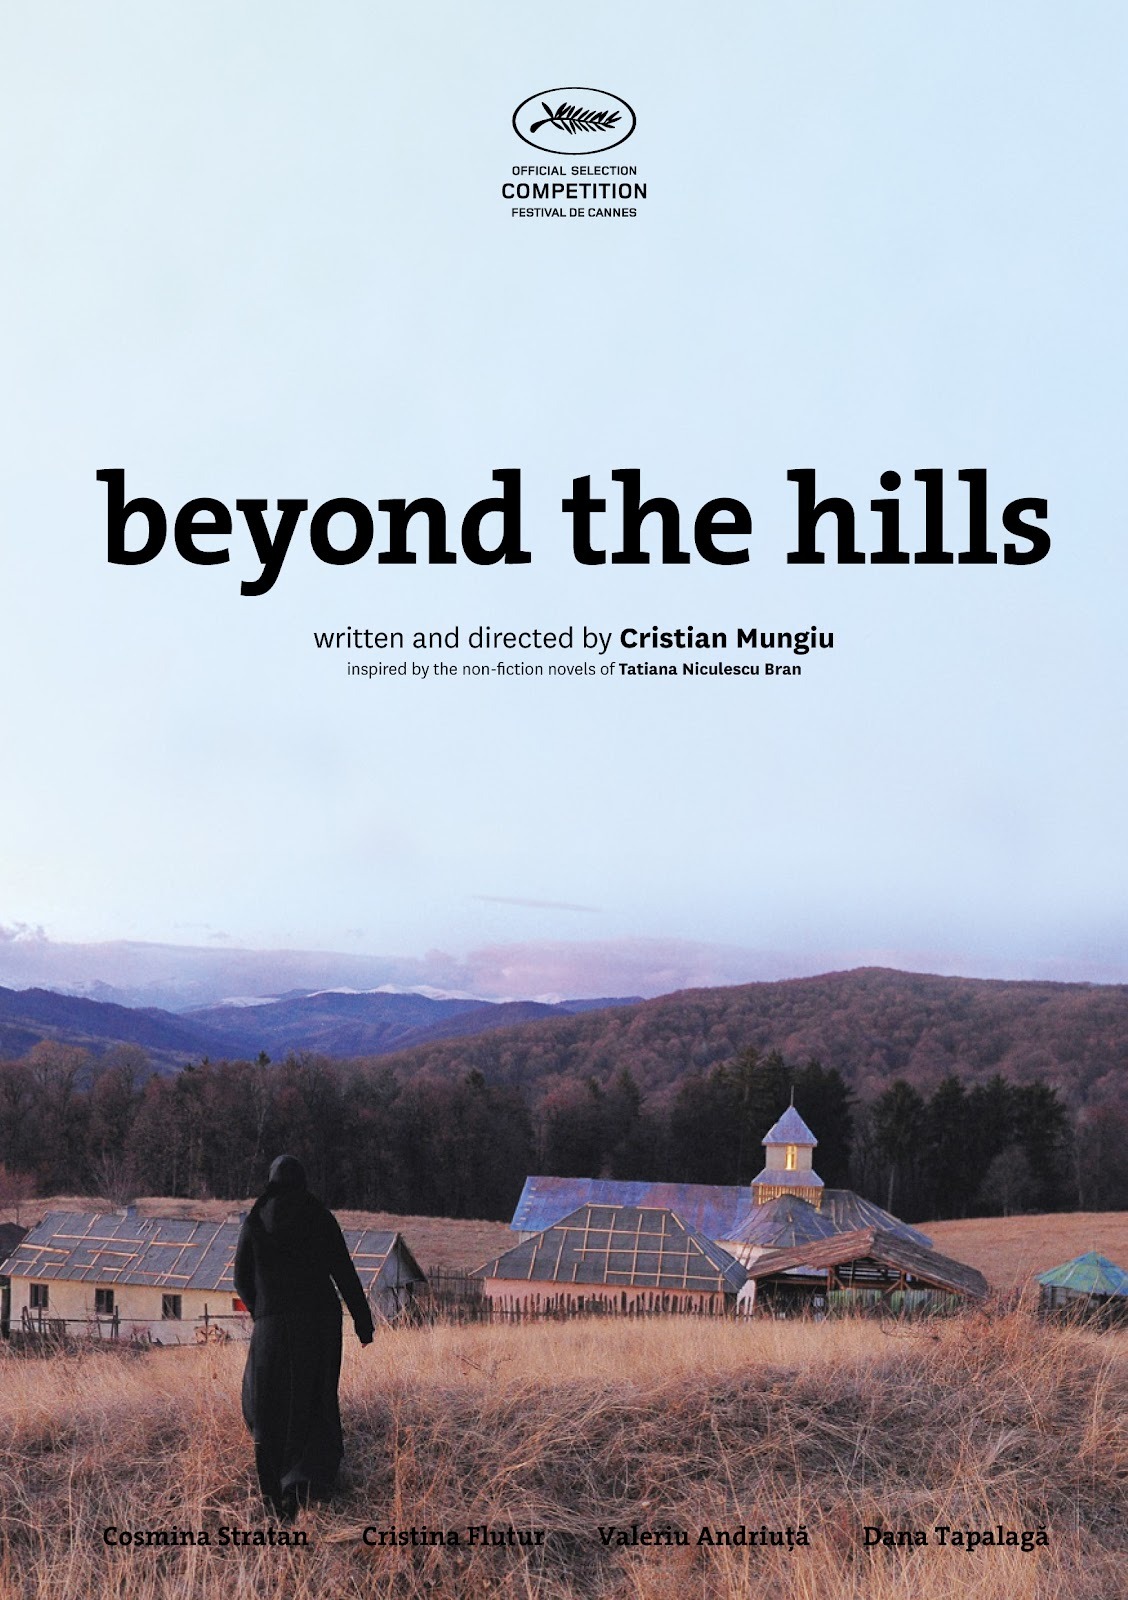 Beyond the hills 2016